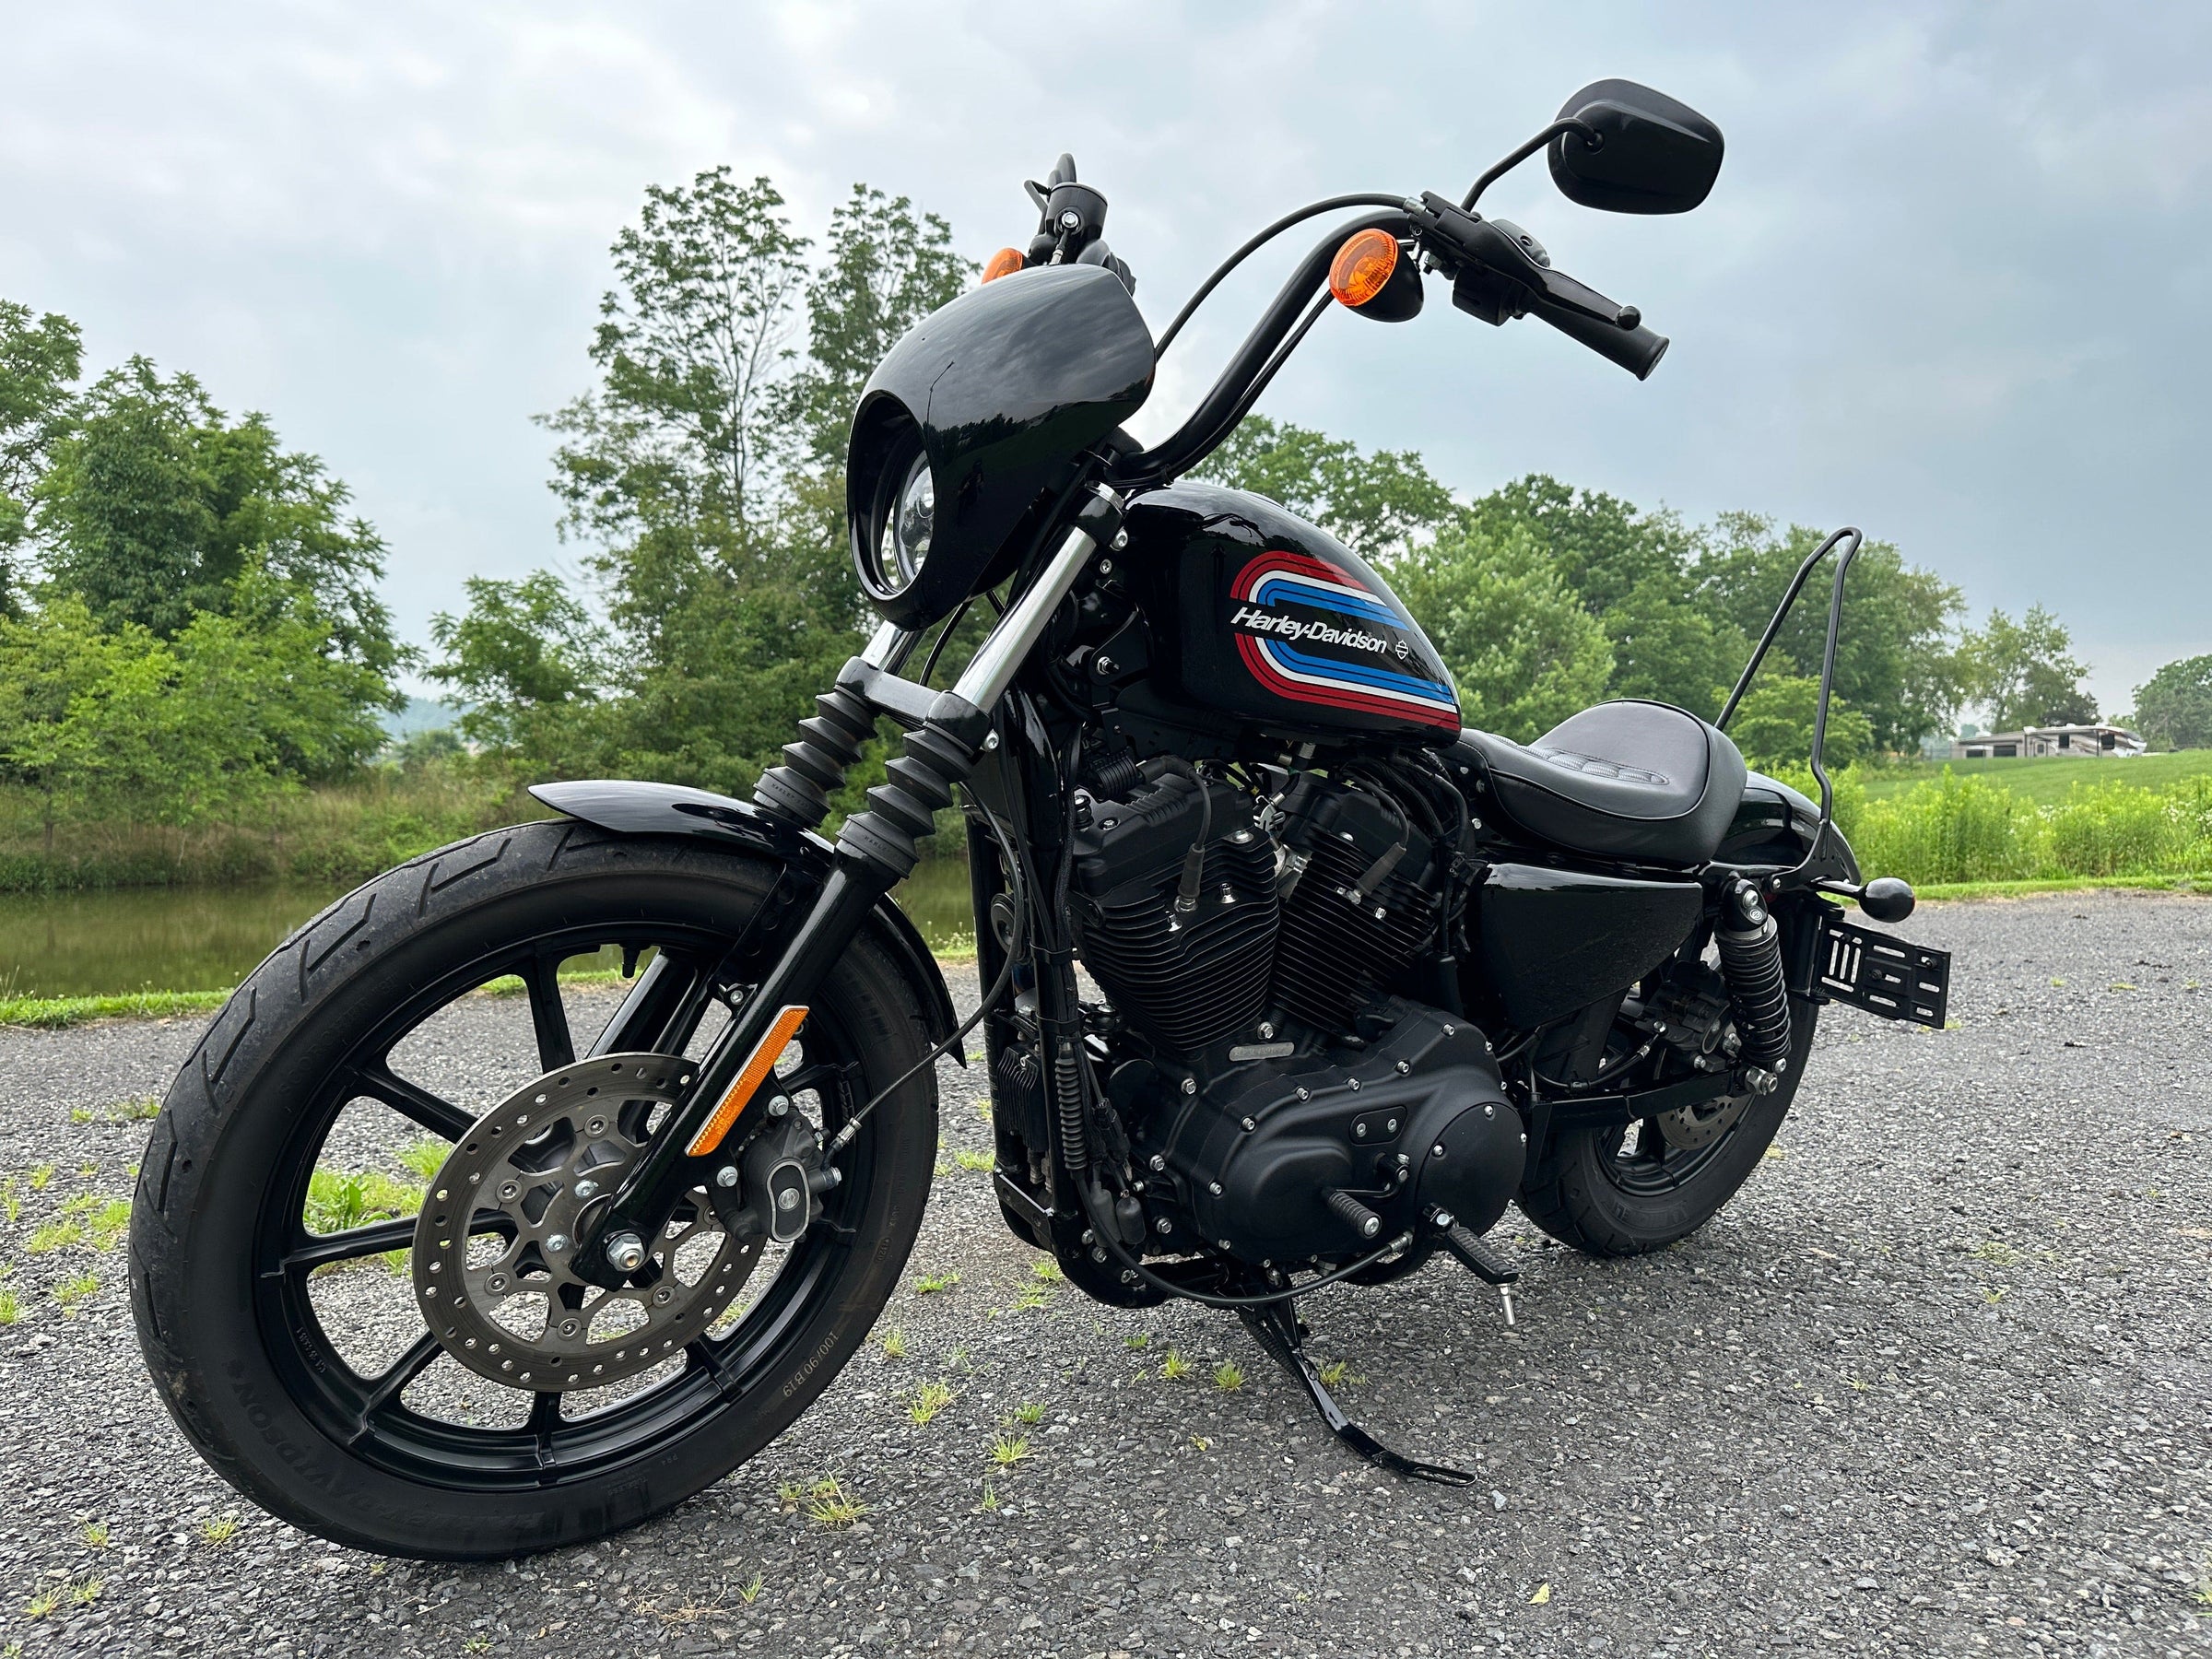 2020 - 2021 Harley Davidson Sportster Iron 1200